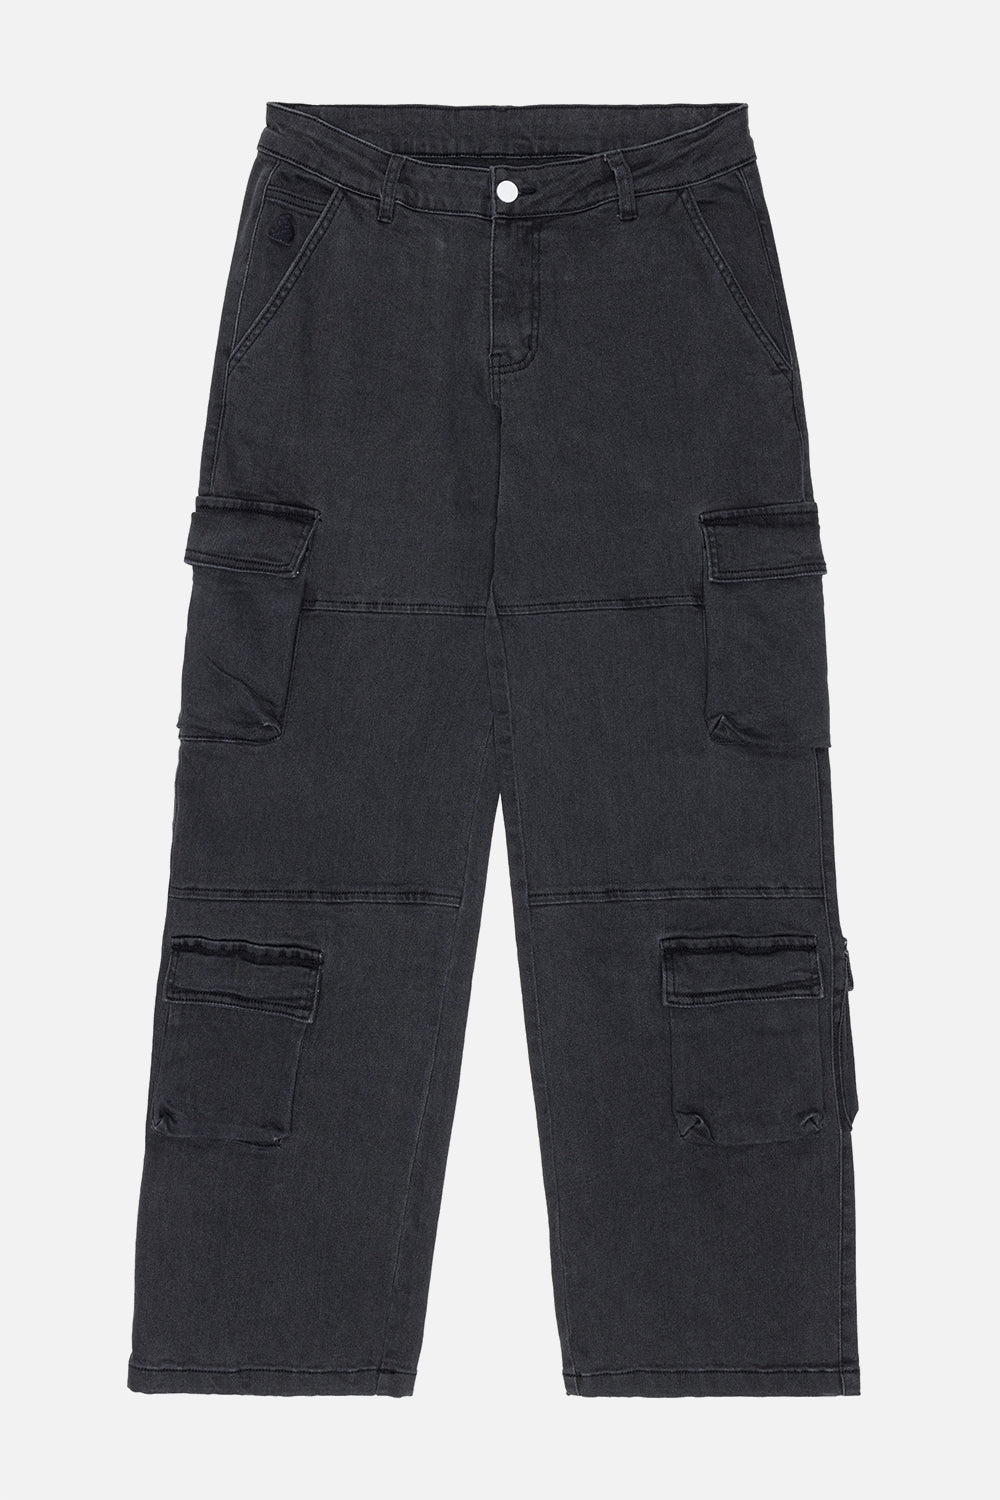 Cargo Pants- Navy Blue Side Pocket Cargos for Men Online